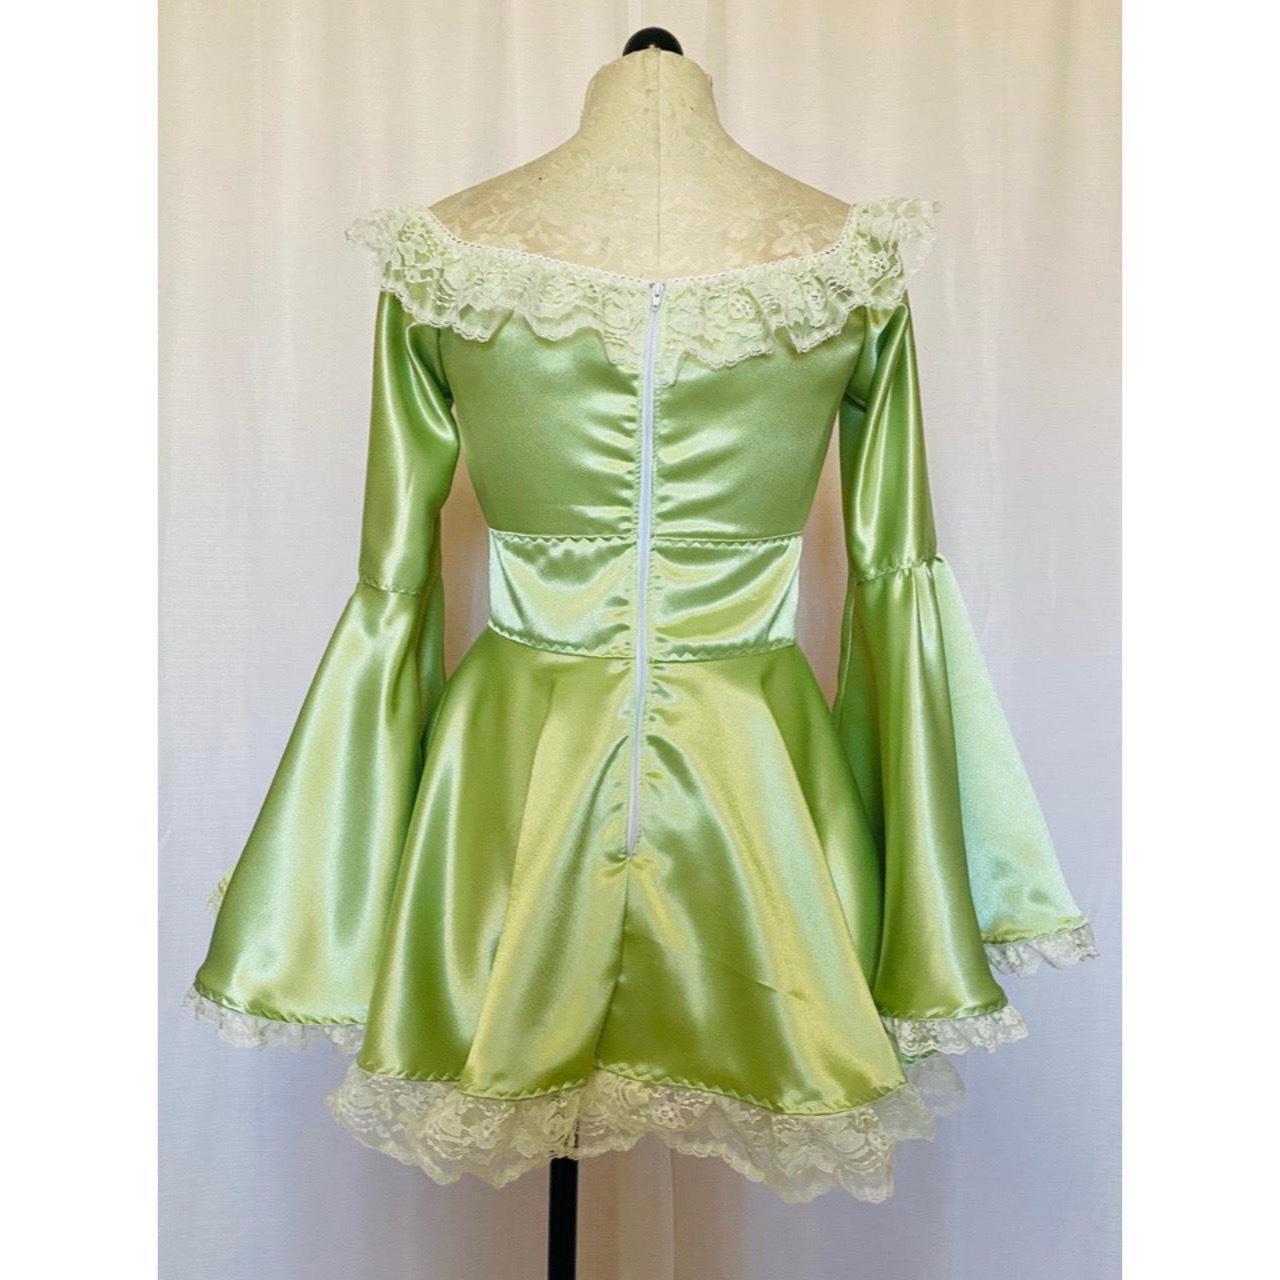 The Deidre Dress in Apple Green